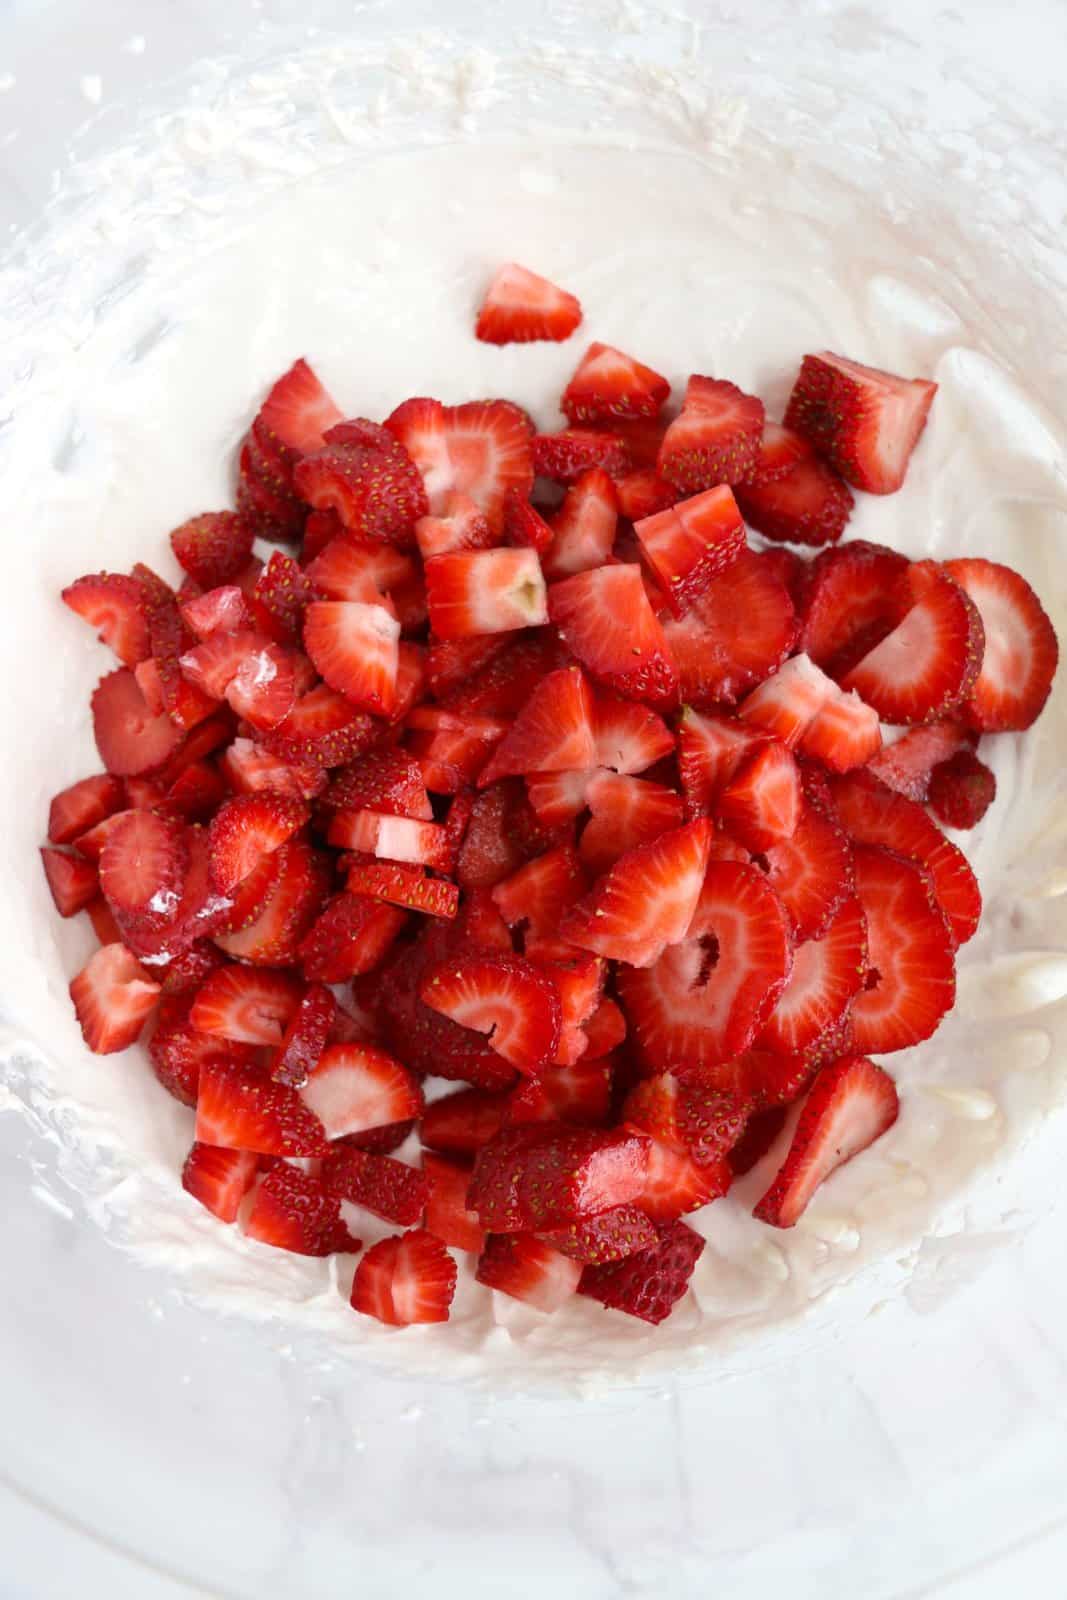 Strawberries added to cheesecake mixture.